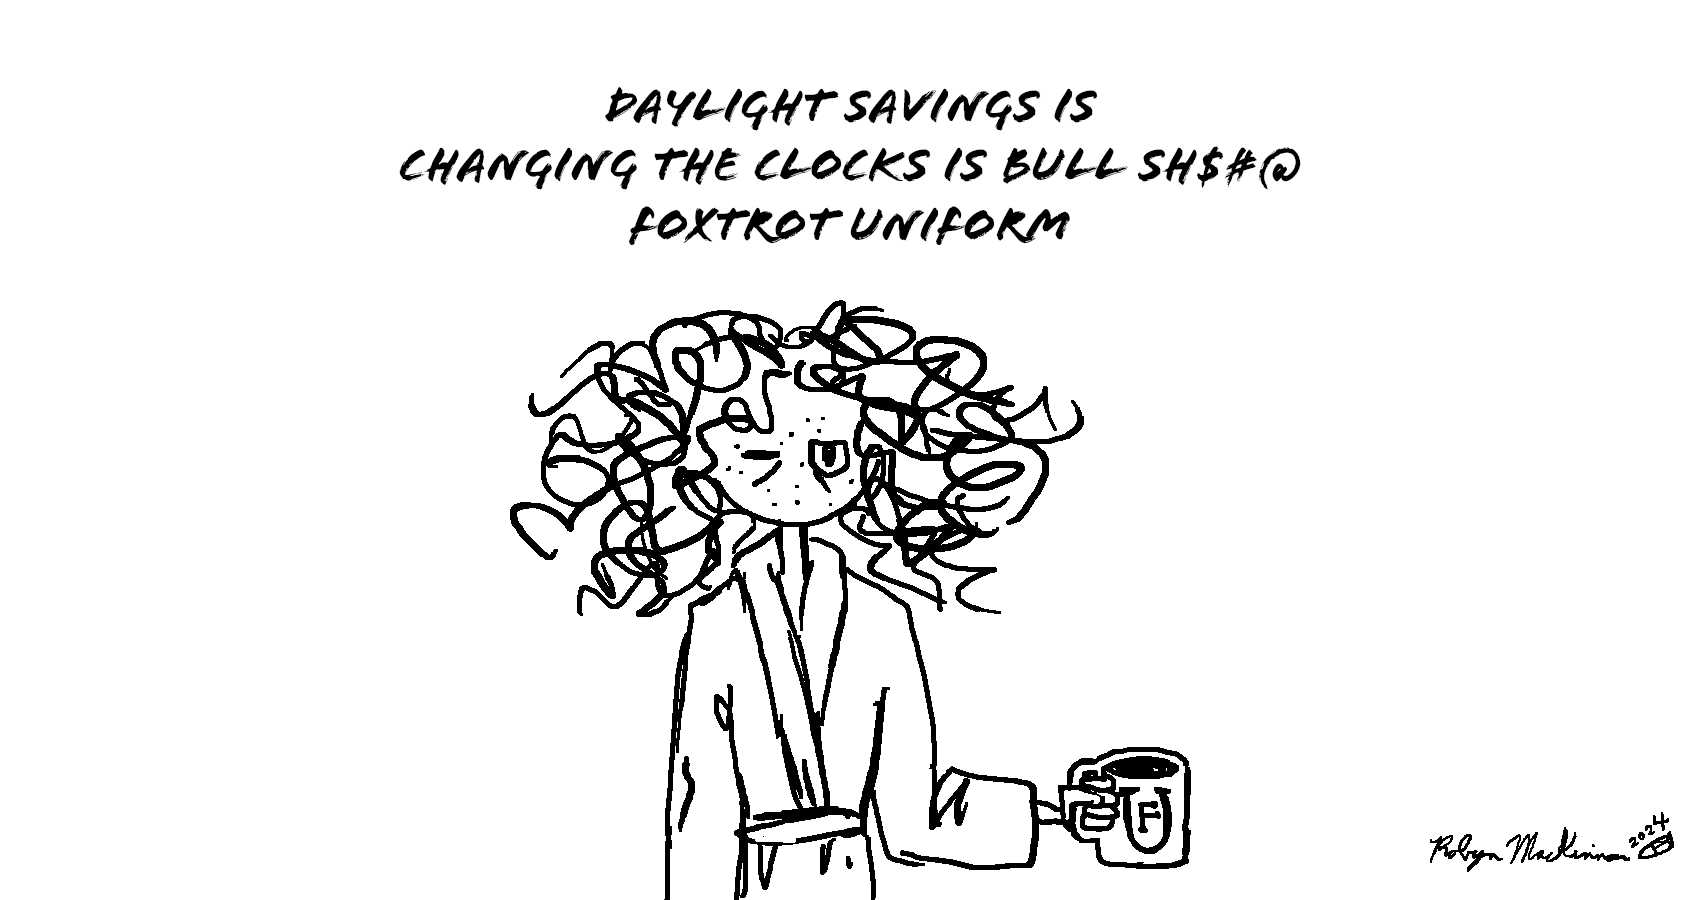 Daylight Savings, a haiku by Robyn MacKinnon at Spillwords.com